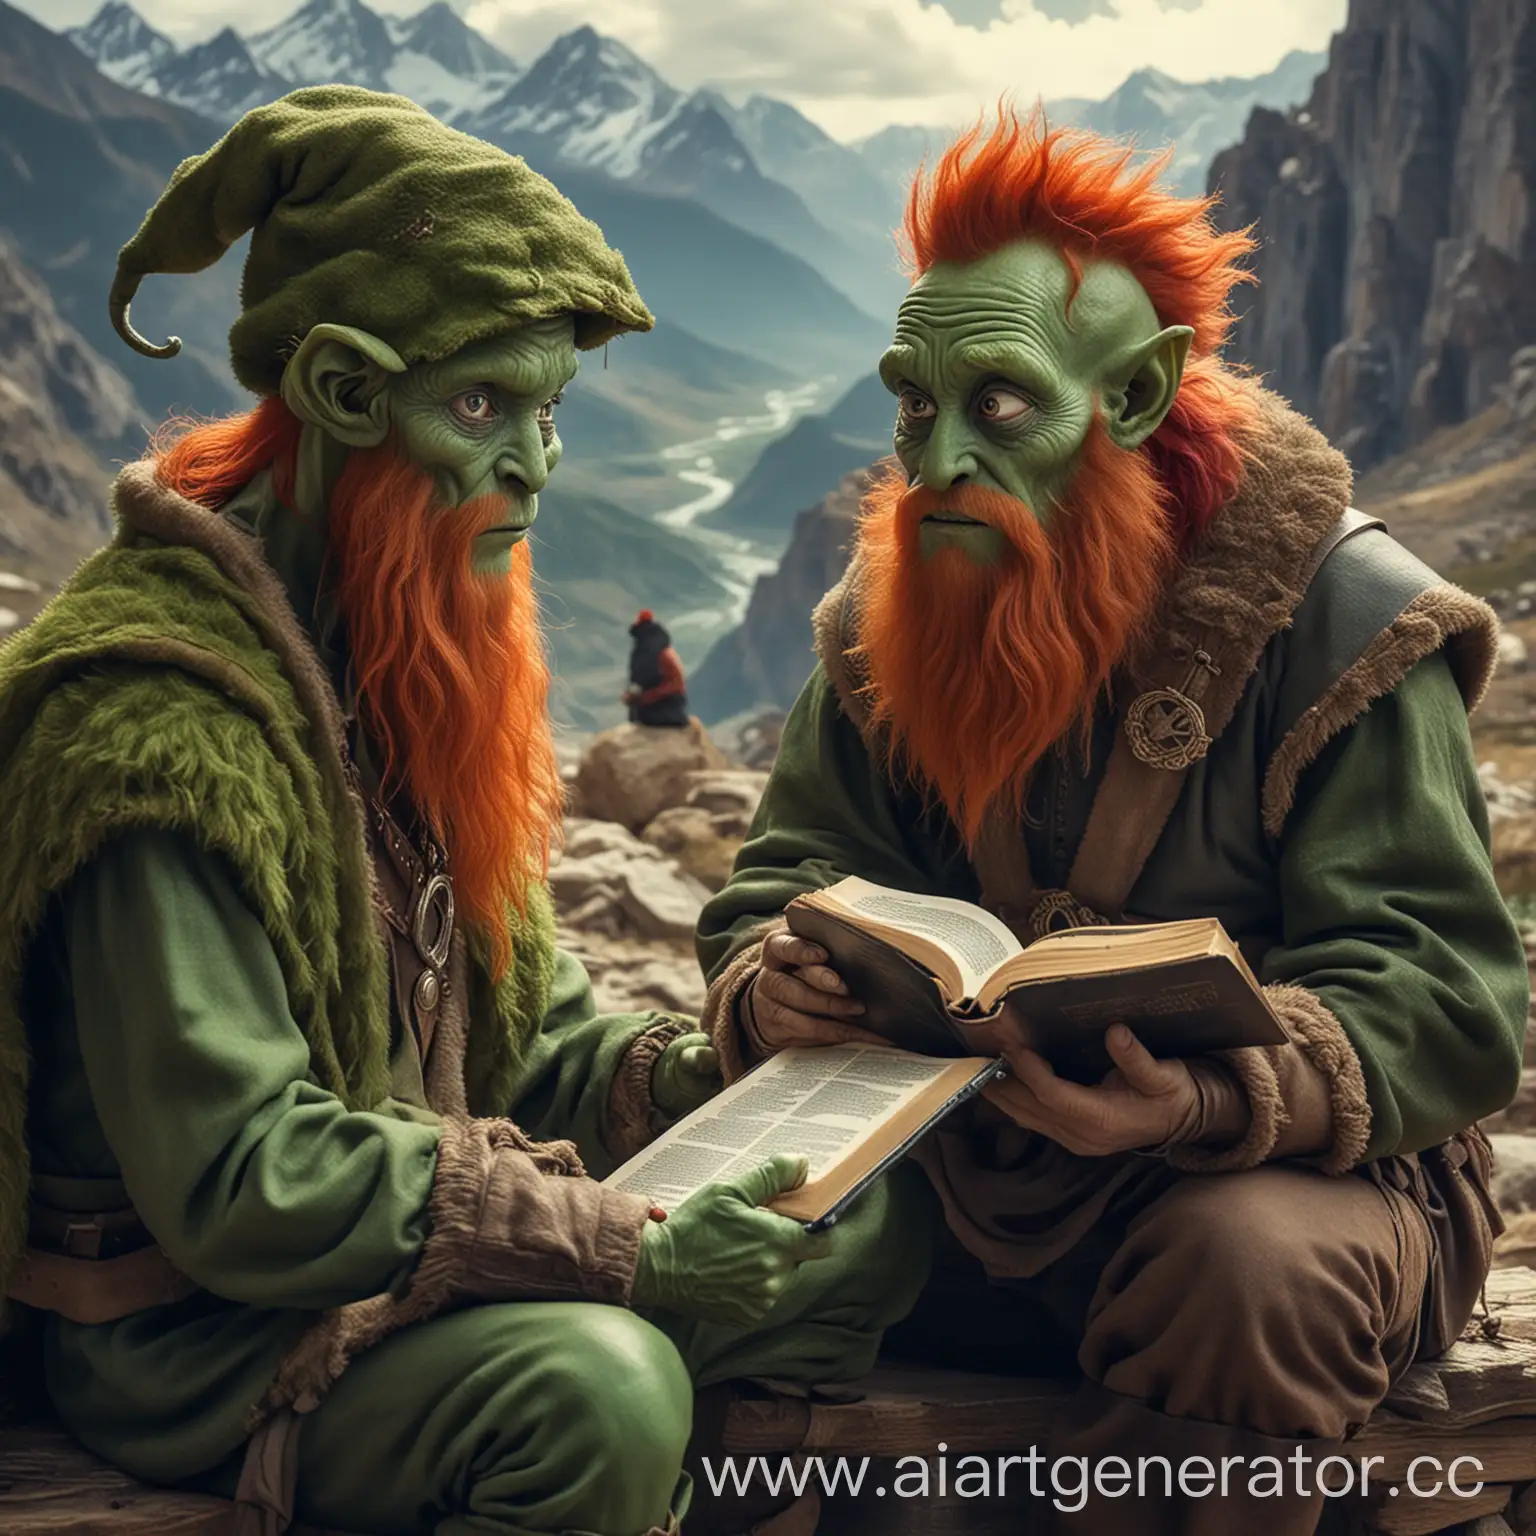 Green-Alien-Reading-Bible-to-Redbearded-Man-in-Mountain-Setting